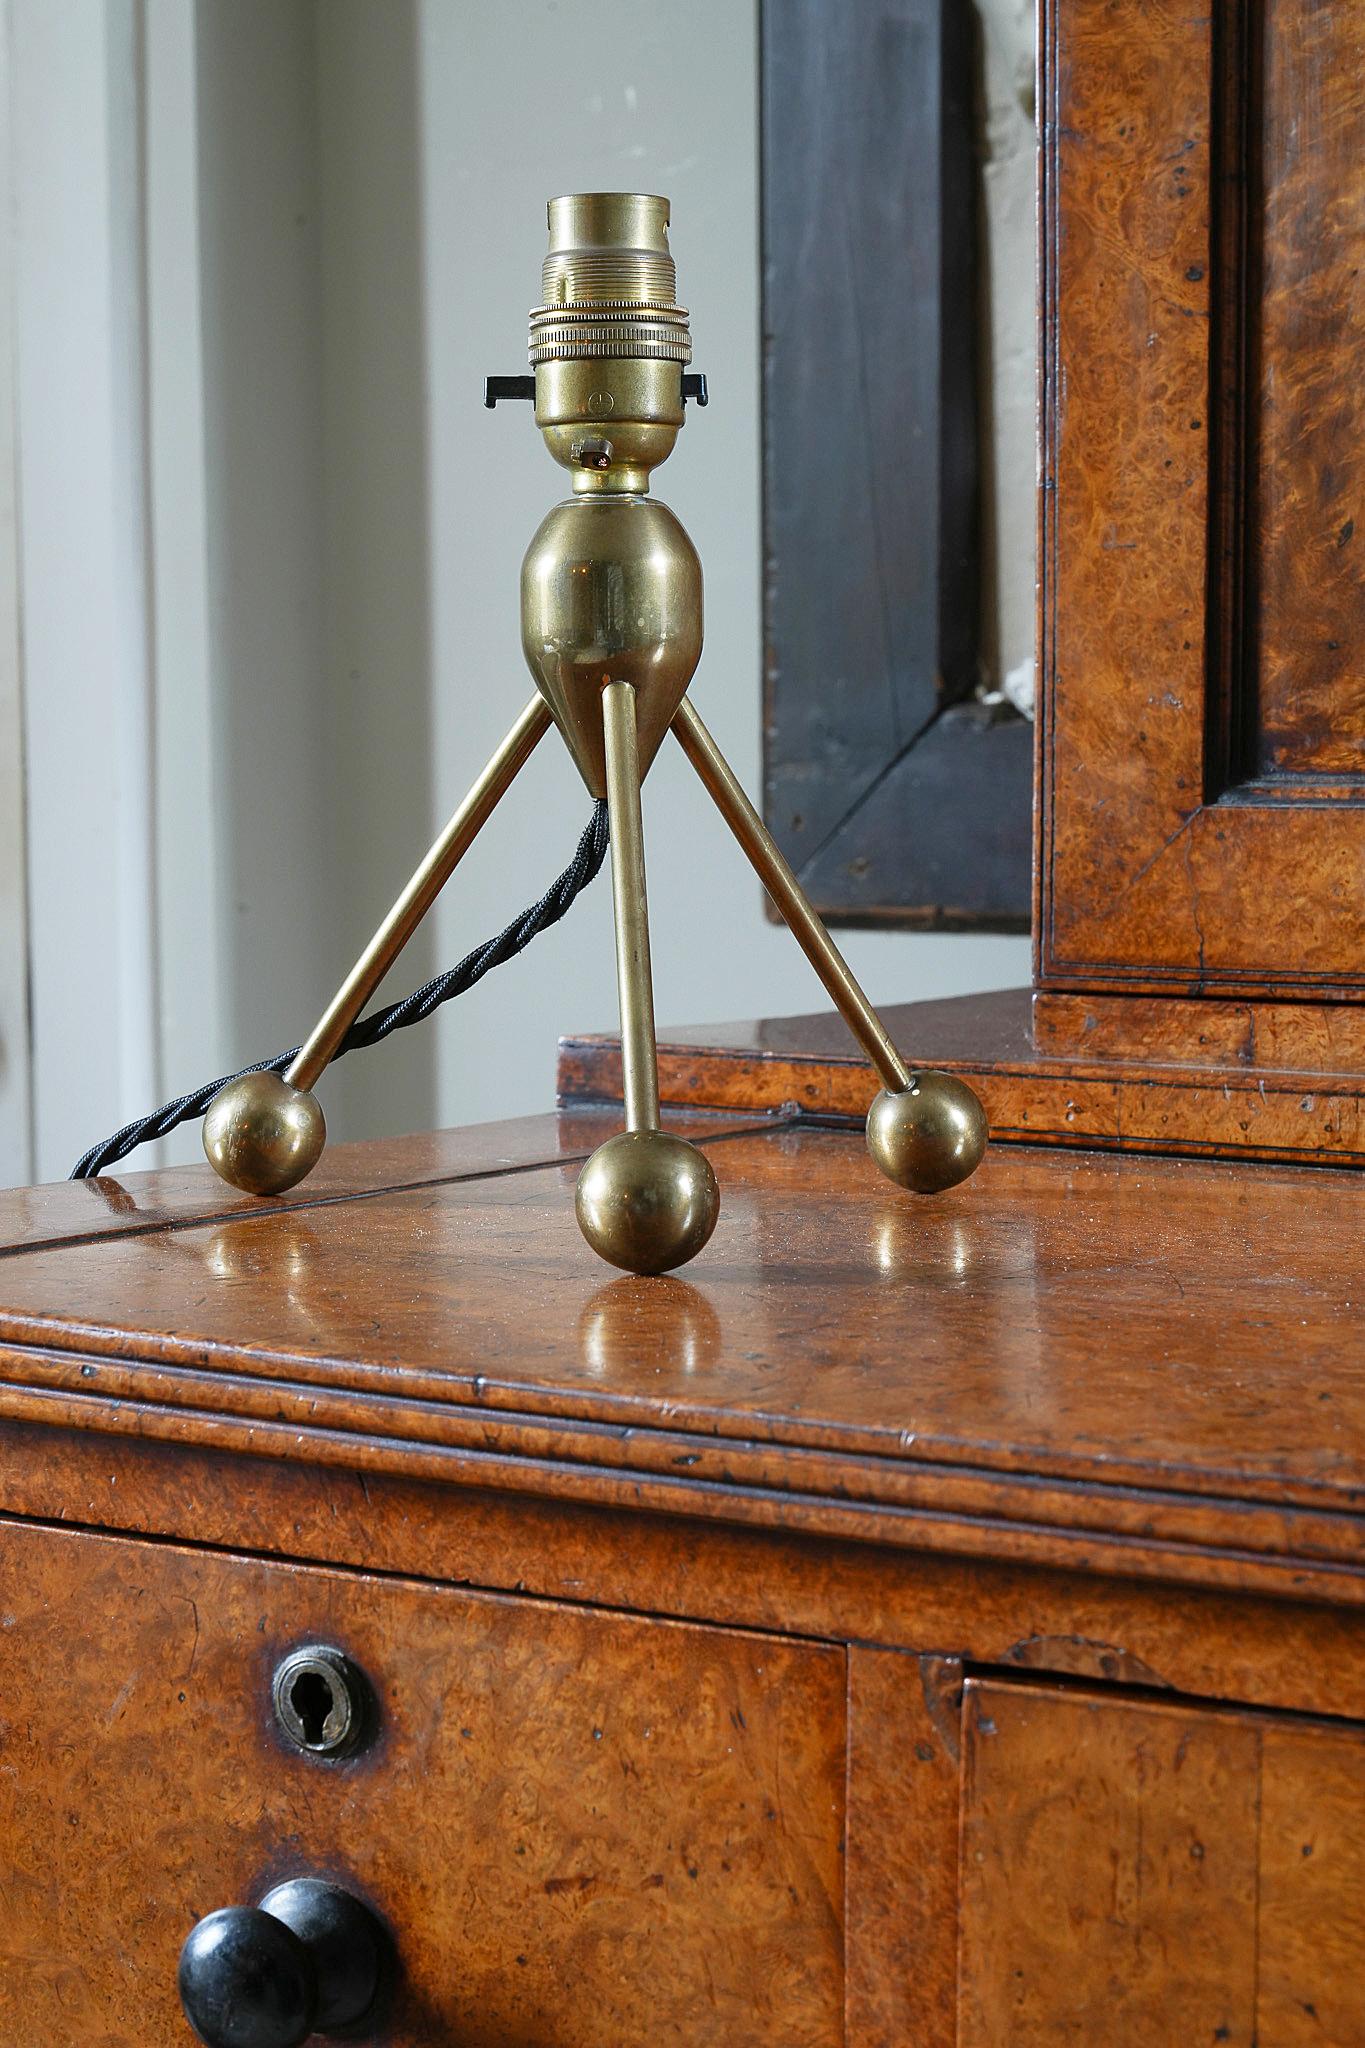 A brass tripod table light raised on ball feet.

